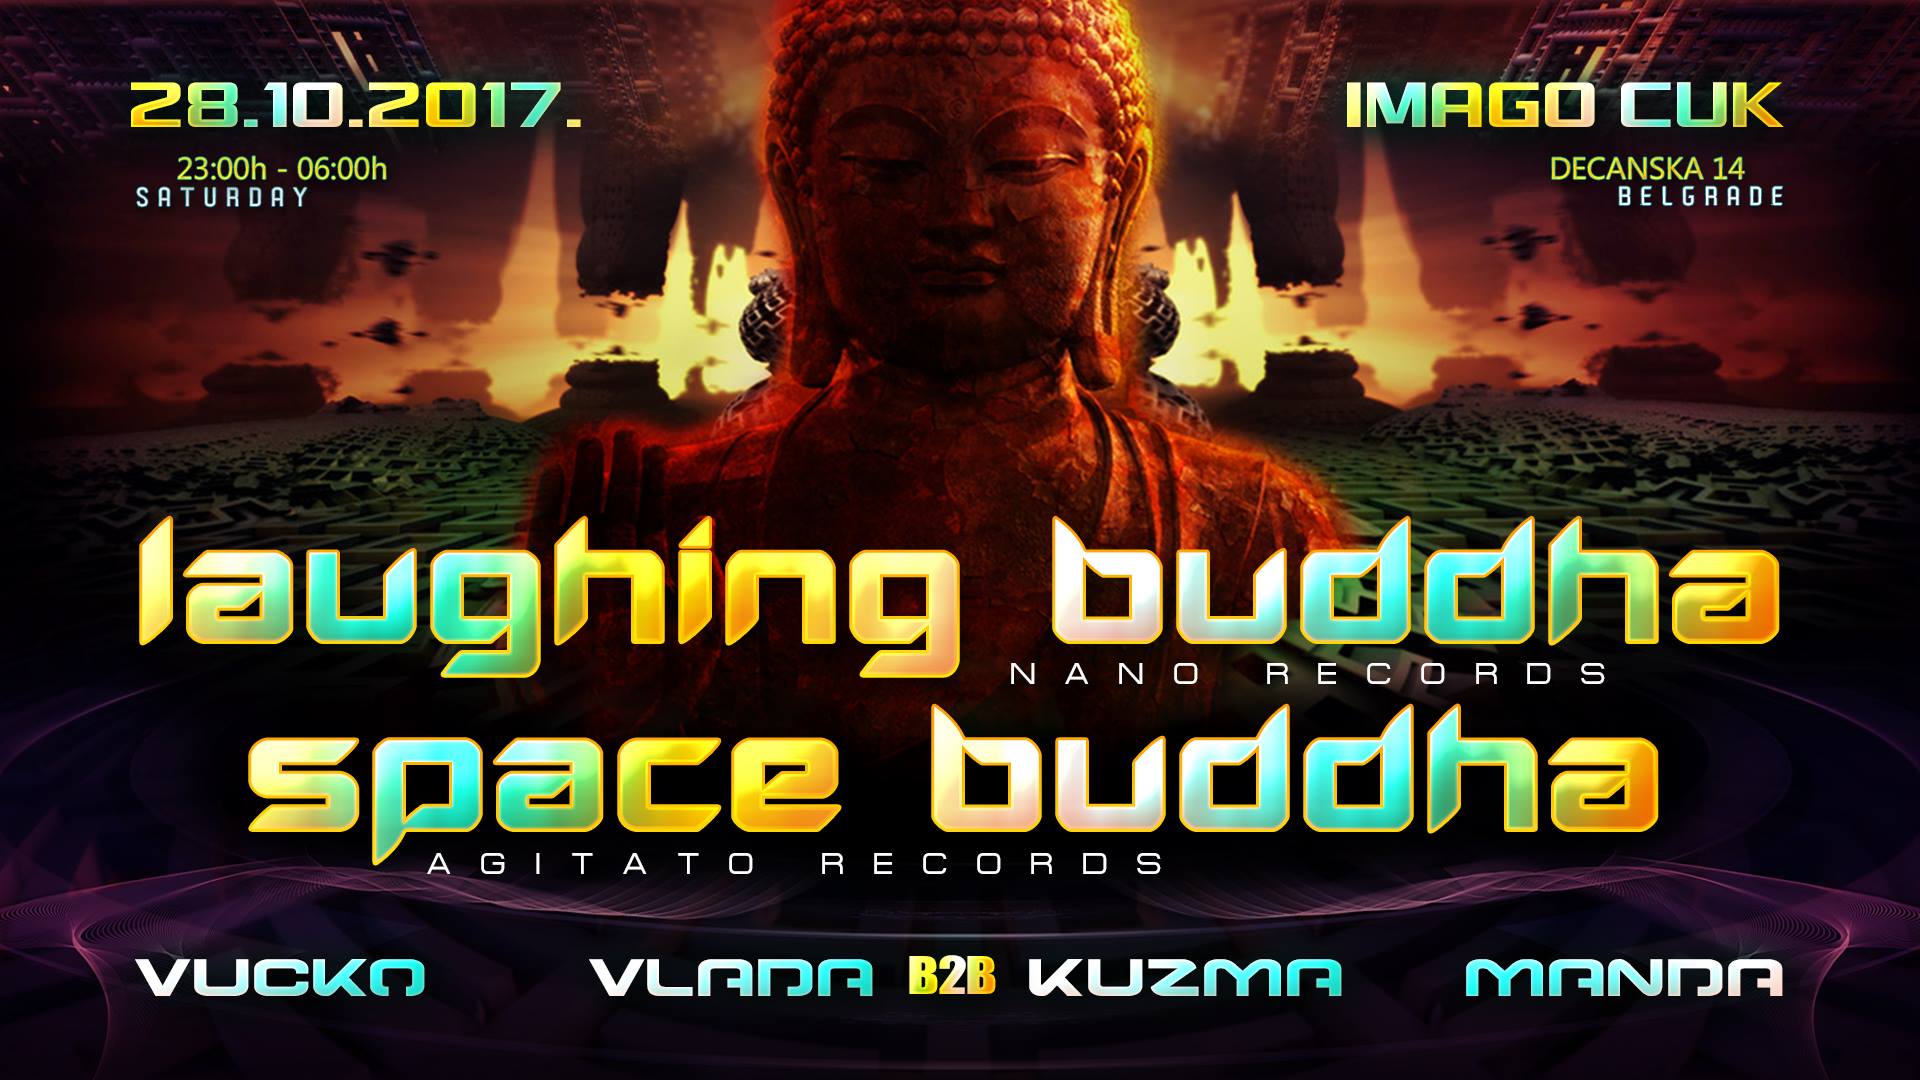 Buddha Night trance party, 28.10.2017. IMAGO CUK